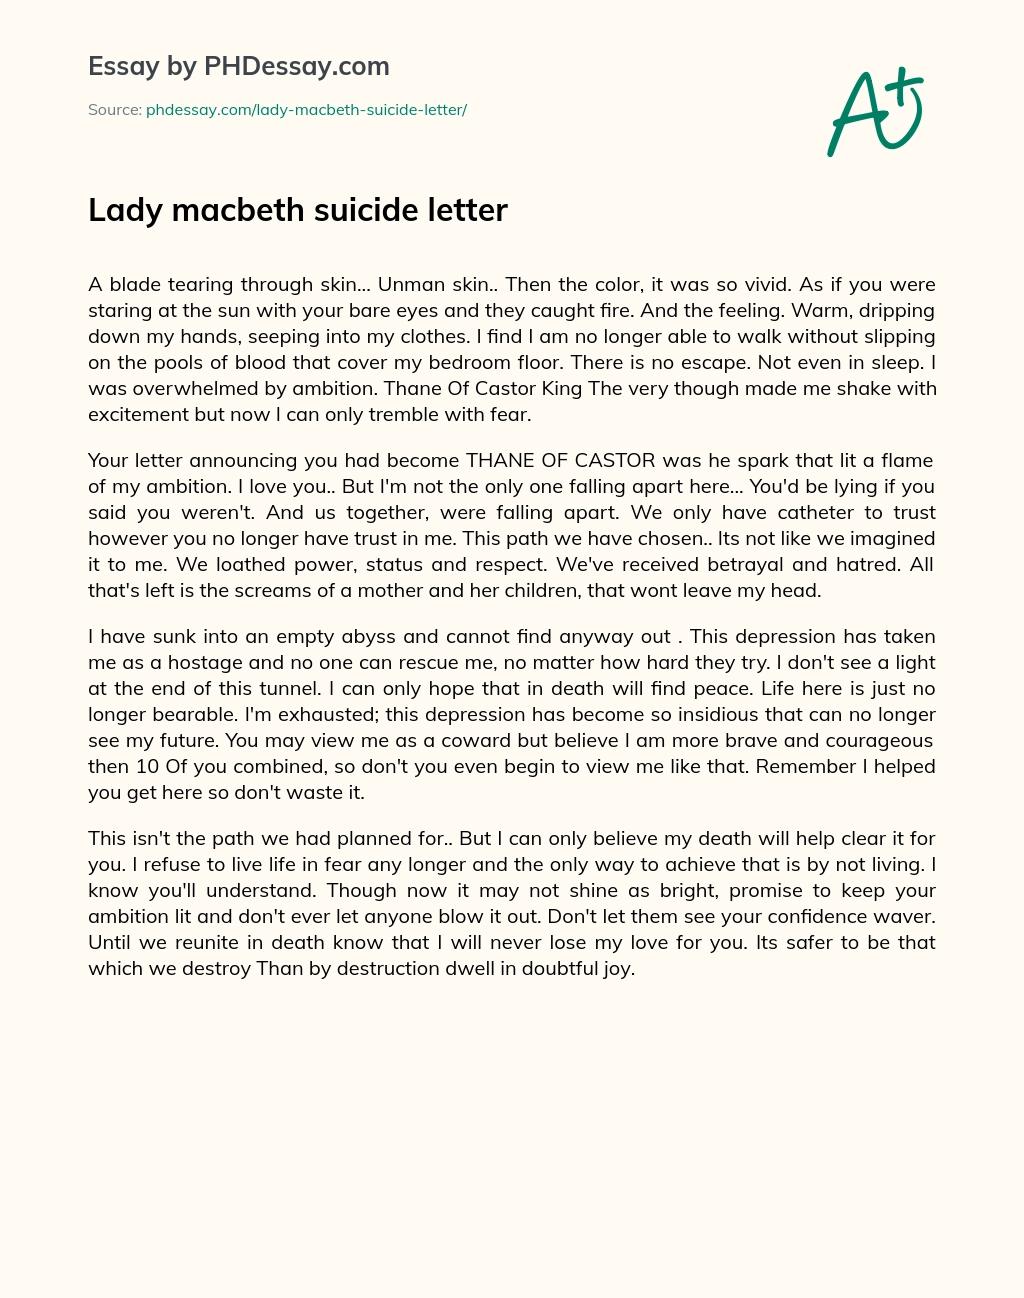 Lady macbeth suicide letter essay